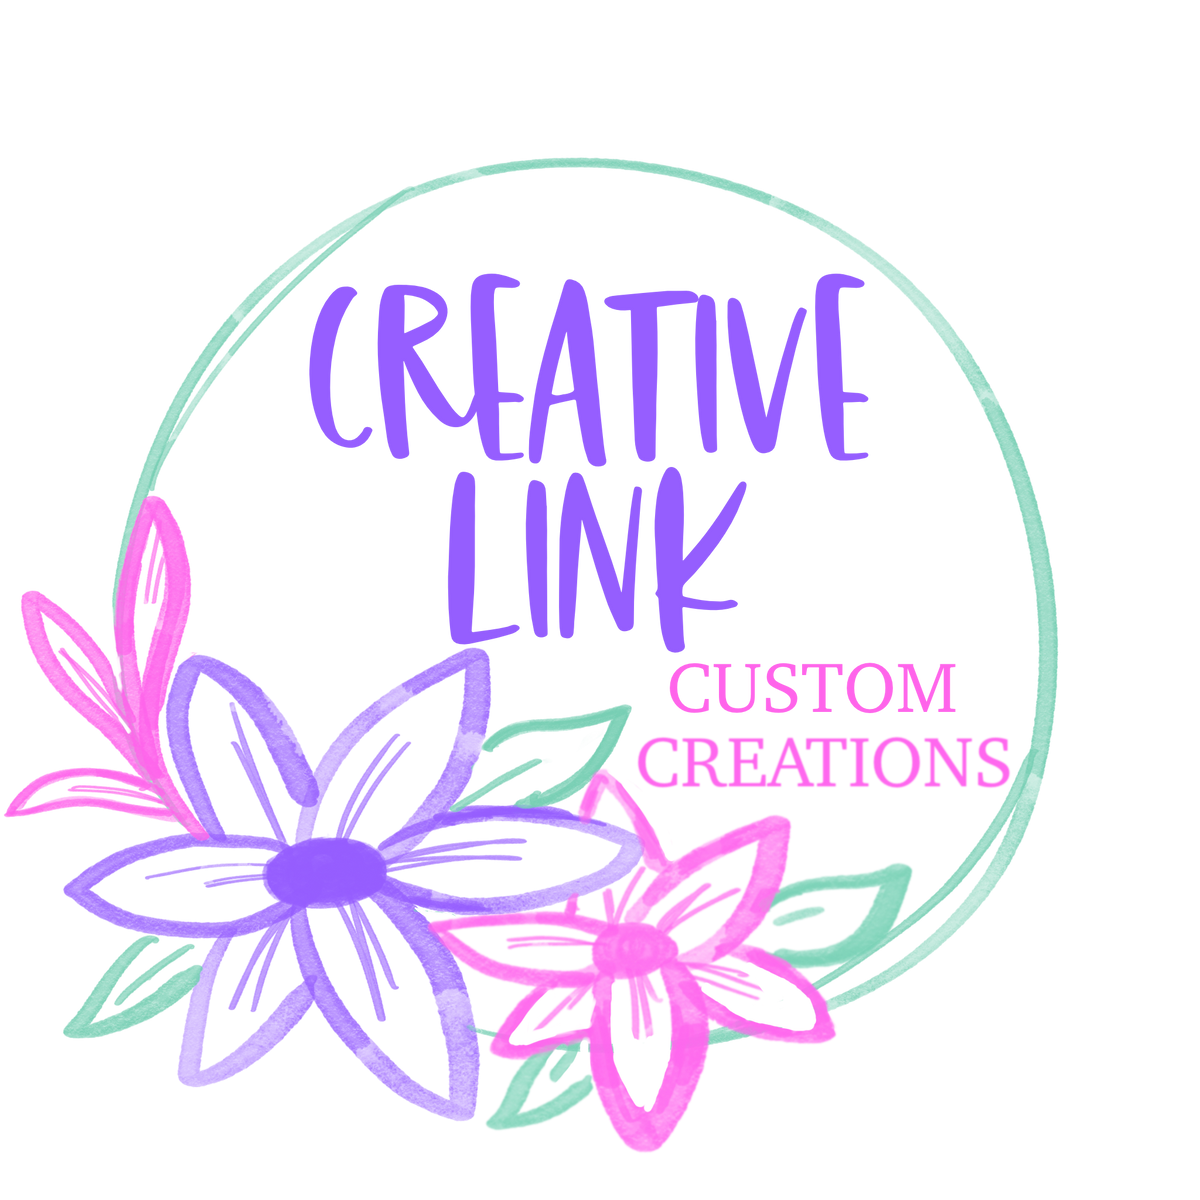 Creative Link Custom Creations